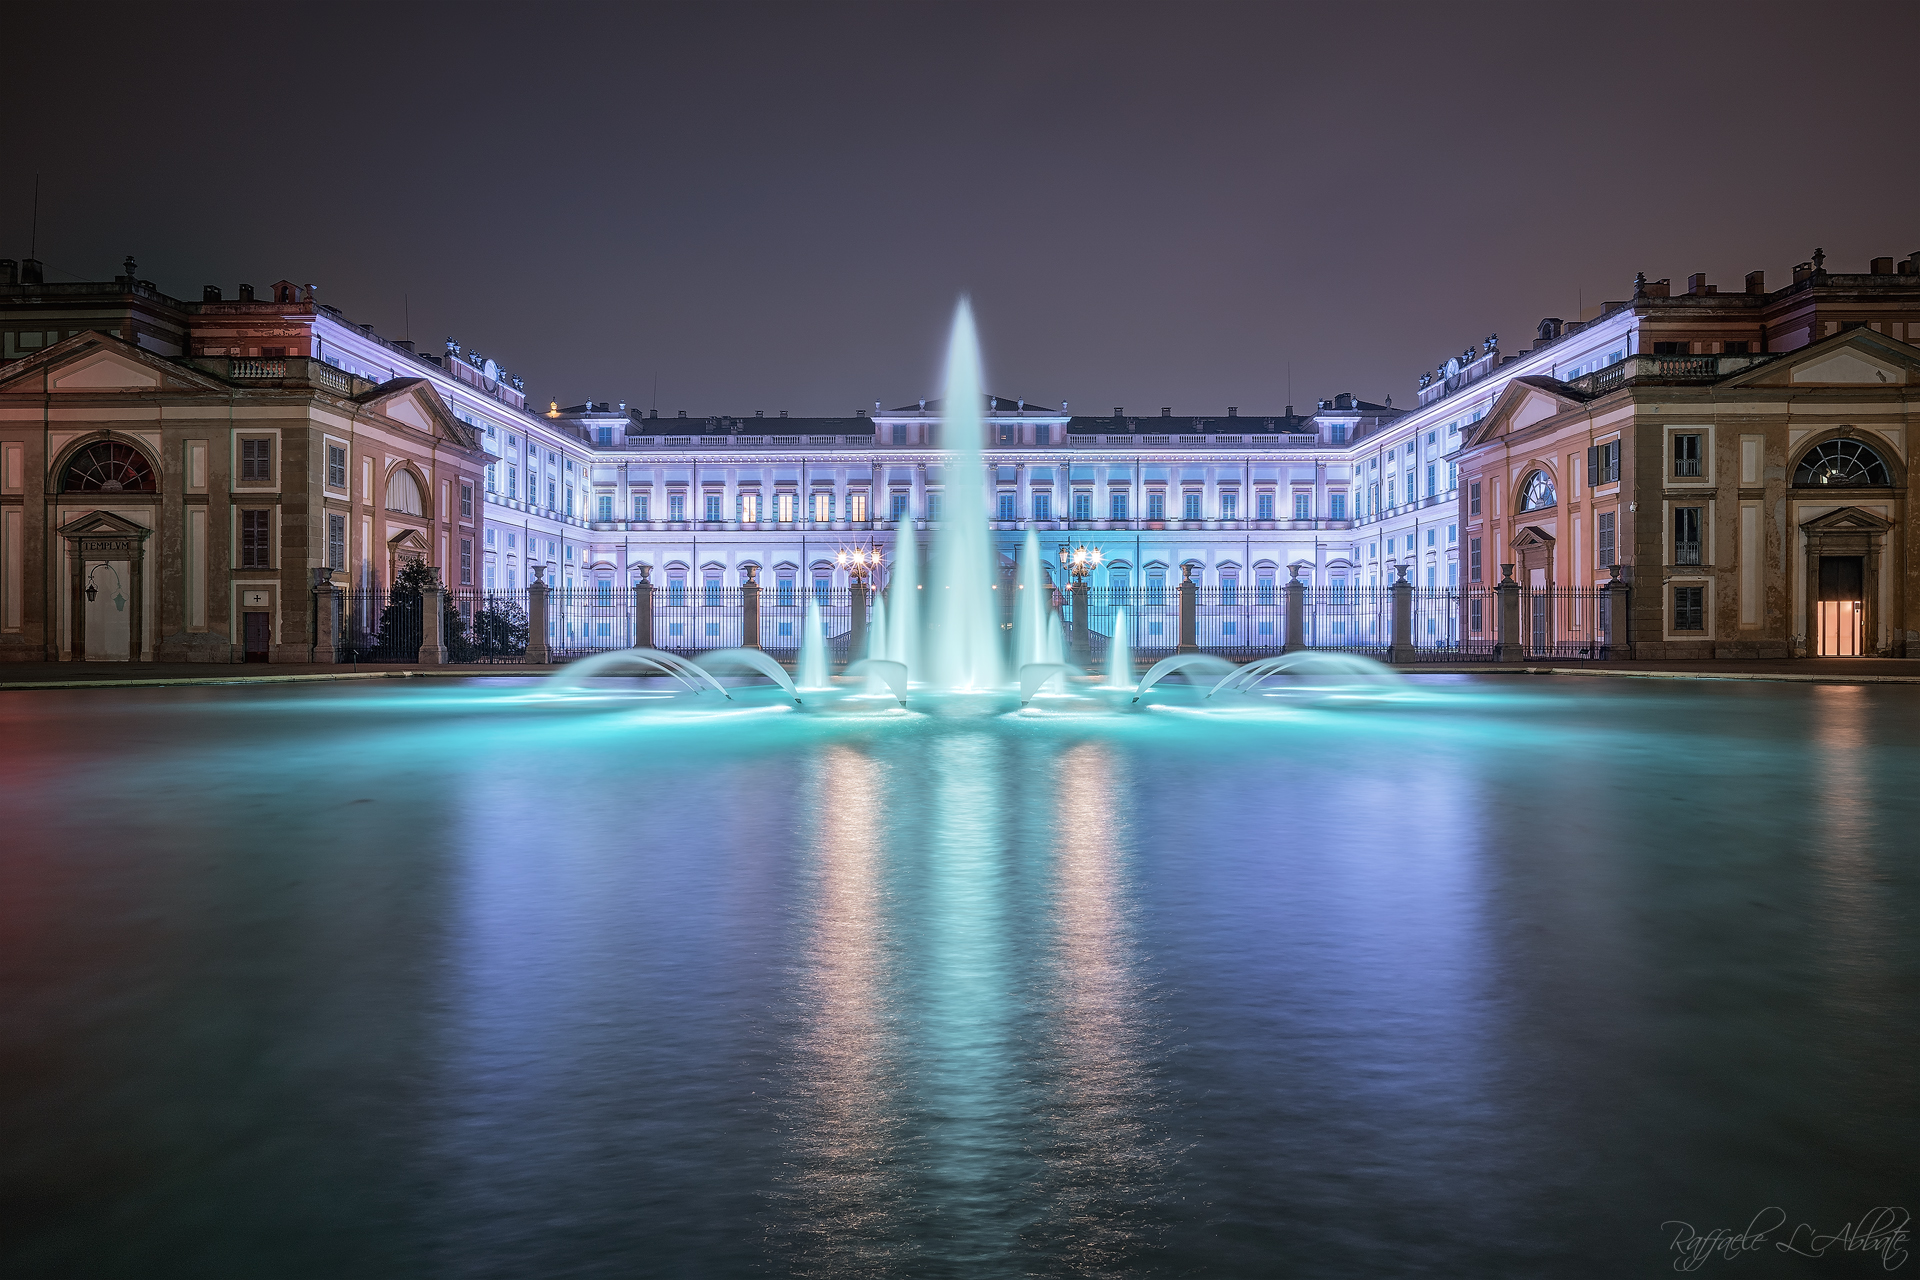 The Fountain of the Royal Villa of Monza ...